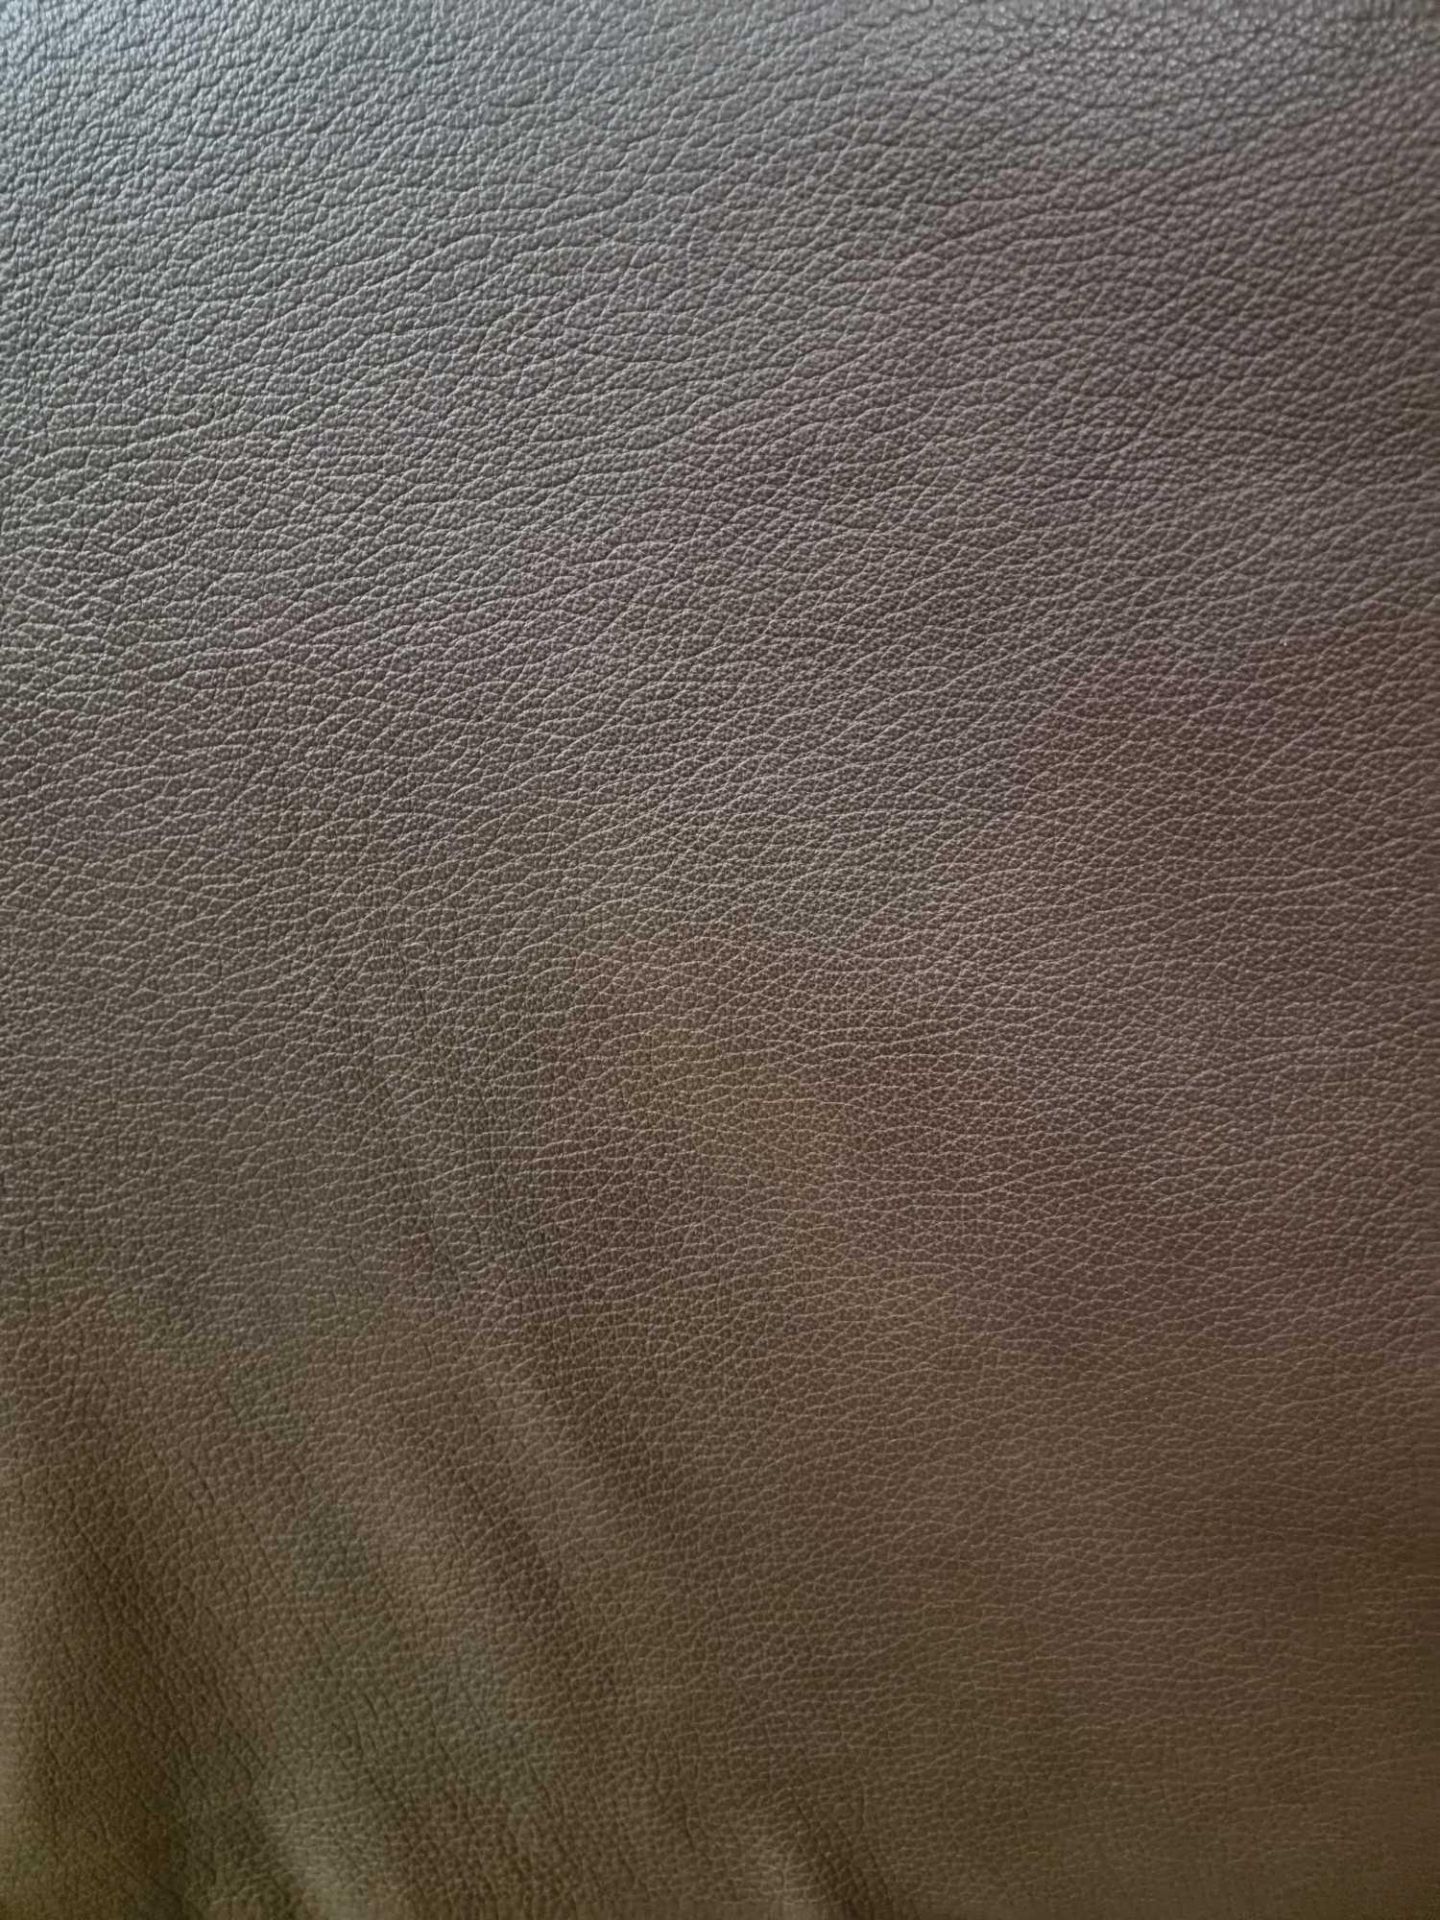 Mastrotto Hudson Chocolate Leather Hide approximately 5.52mÂ² 2.4 x 2.3cm - Bild 2 aus 3